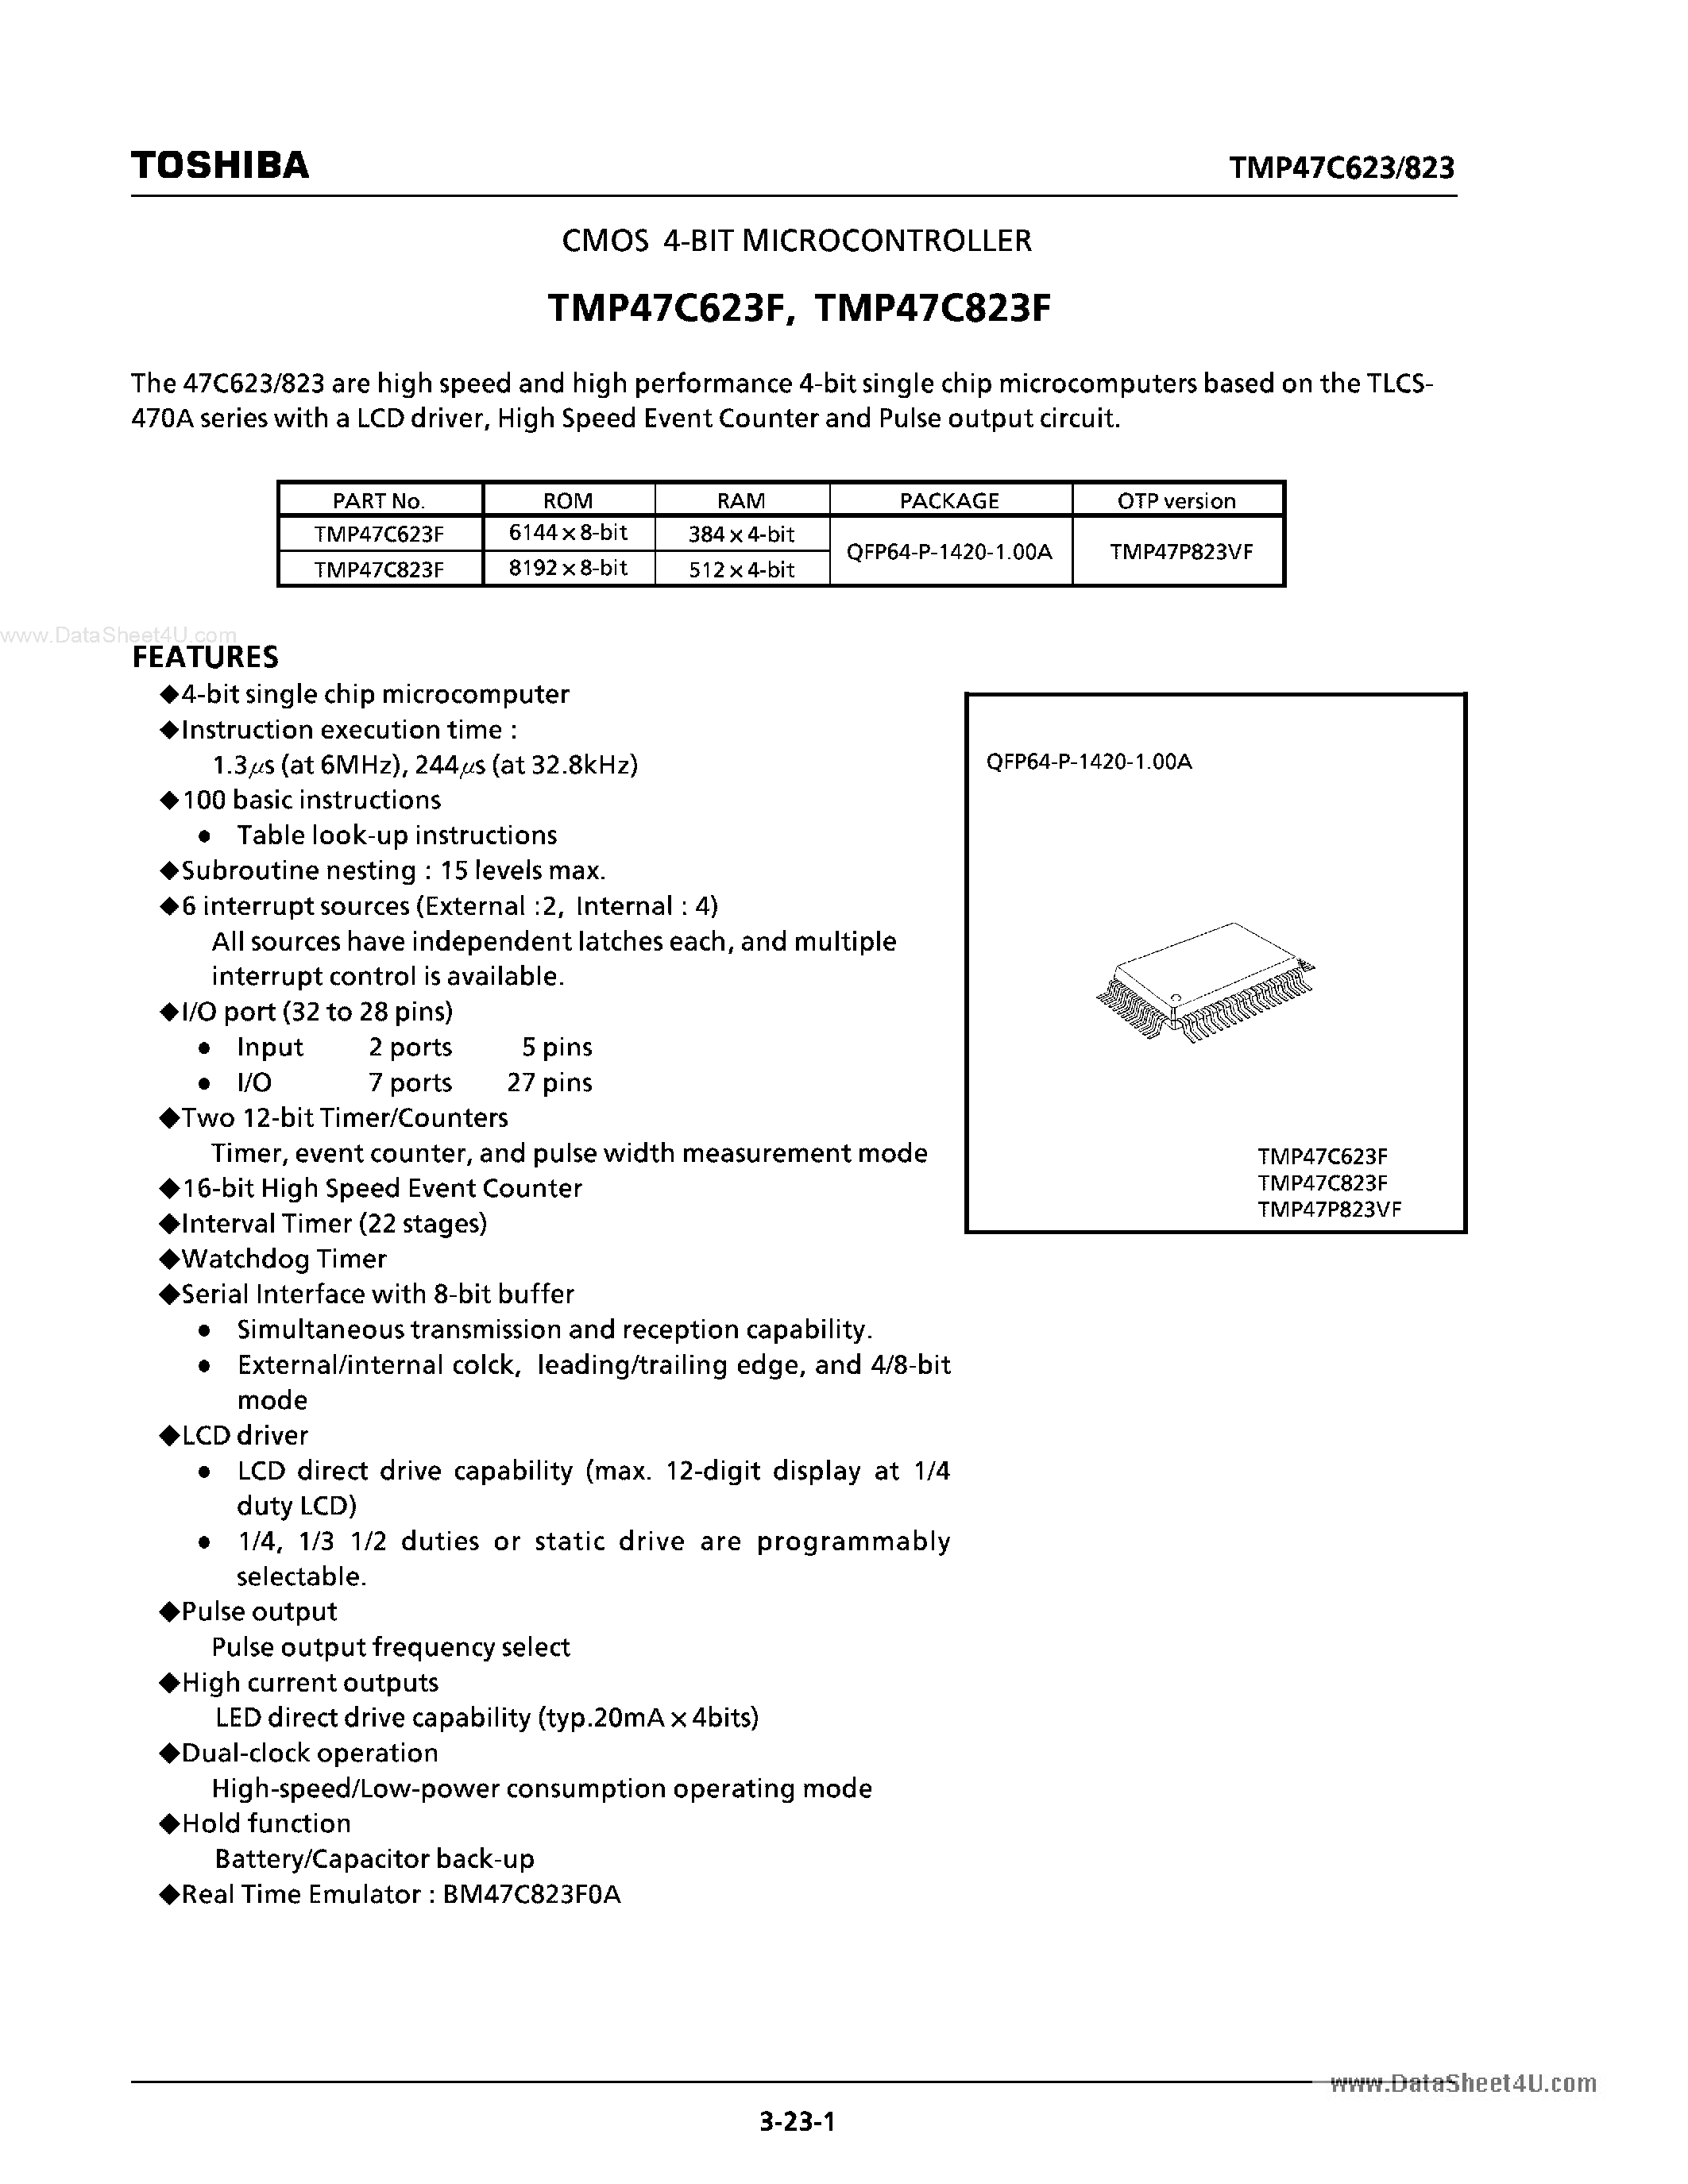 Даташит TMP47C623F - (TMP47C623F / TMP47C823F) CMOS 4-bit Microcontroller страница 1